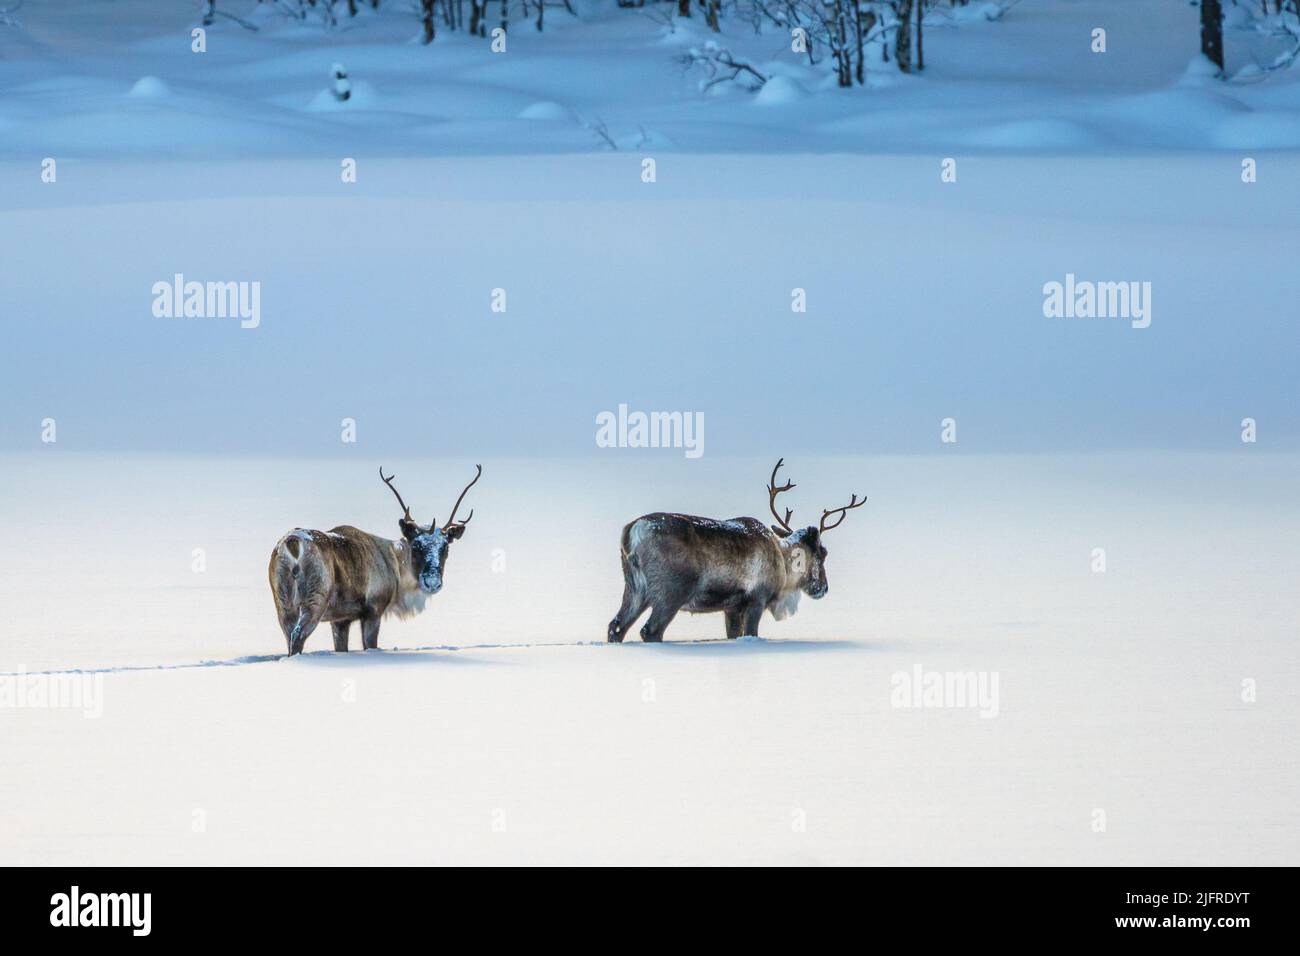 Two Reindeers, Rangifer tarandus, walking in deep snow, Kvikkjokk, Swedish Lapland, Sweden Stock Photo